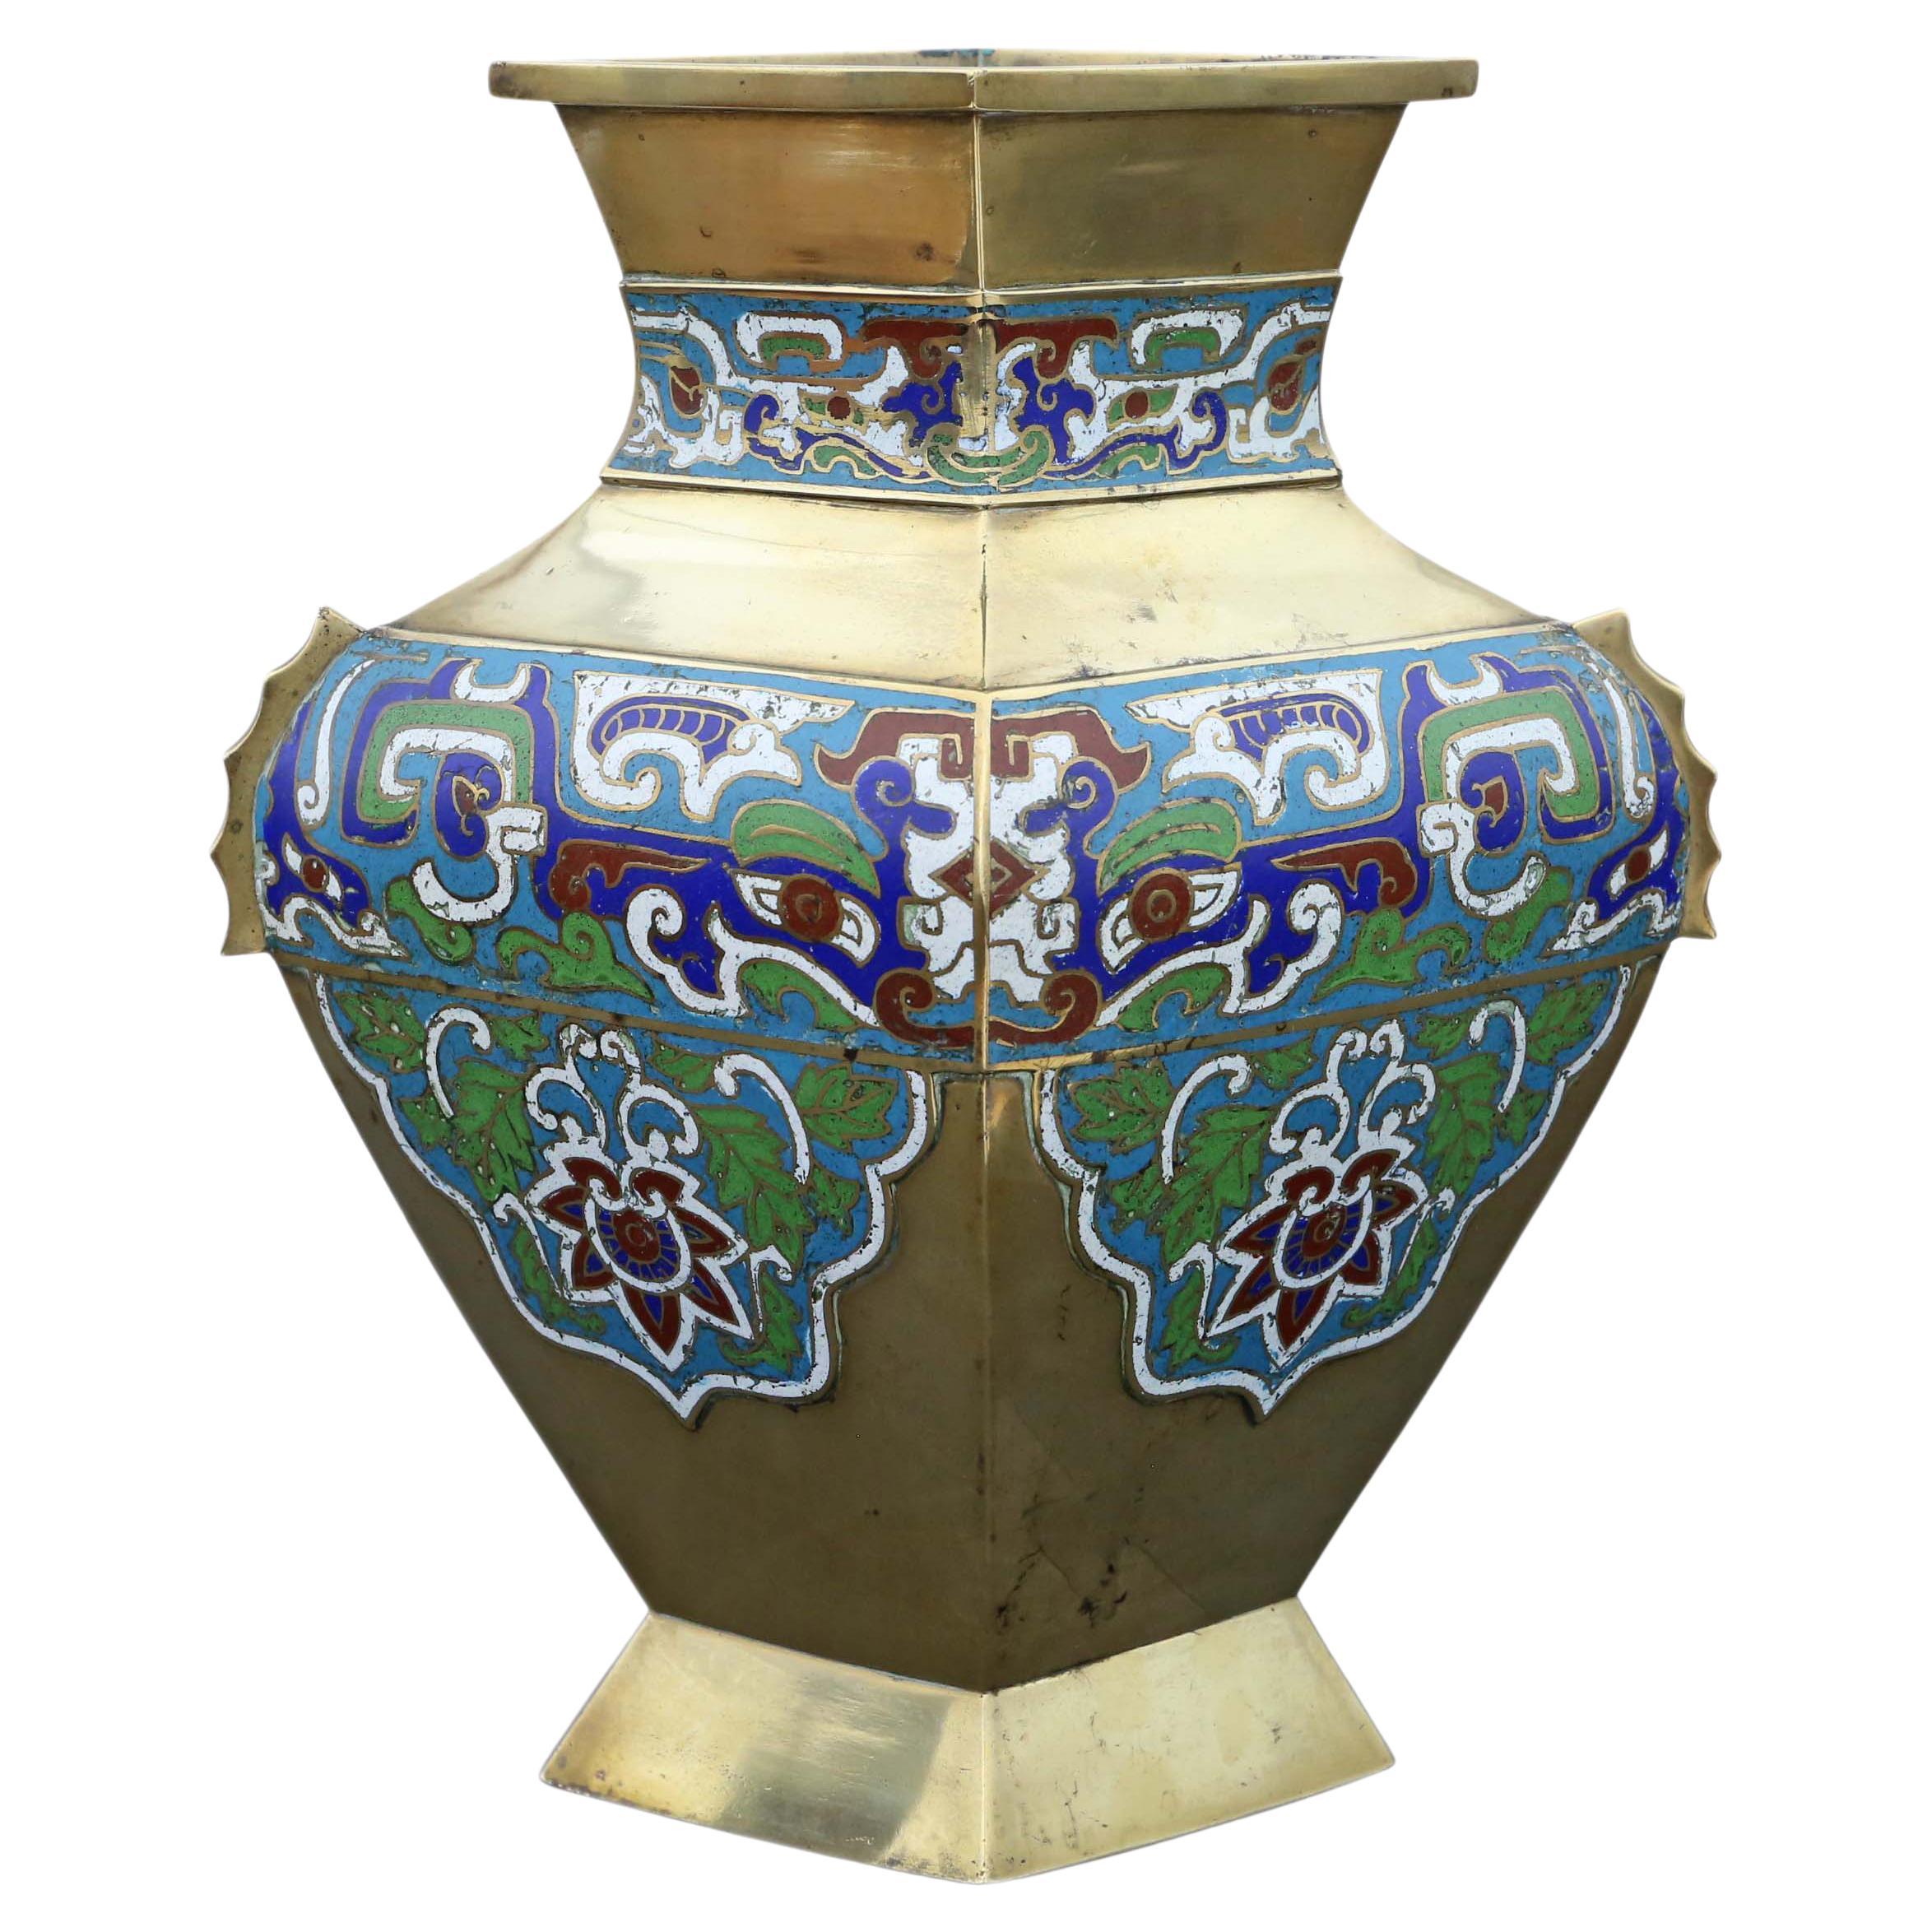 Antique Large Chinese Brass Bronze Champleve Enamel Vase